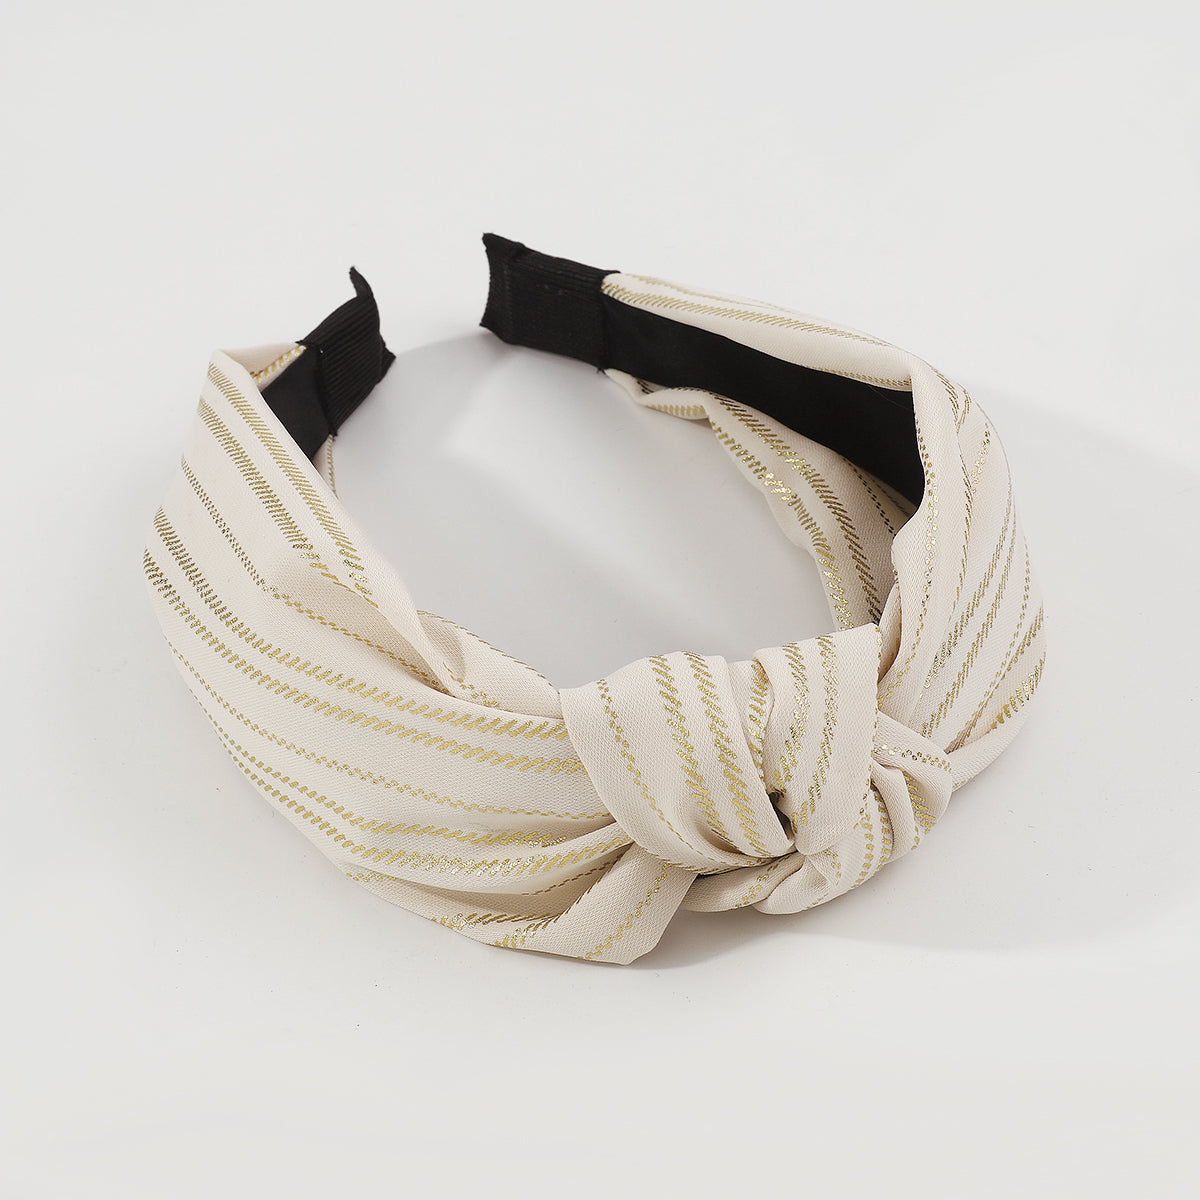 Turban Striped Top Knotted Headband medyjewelry